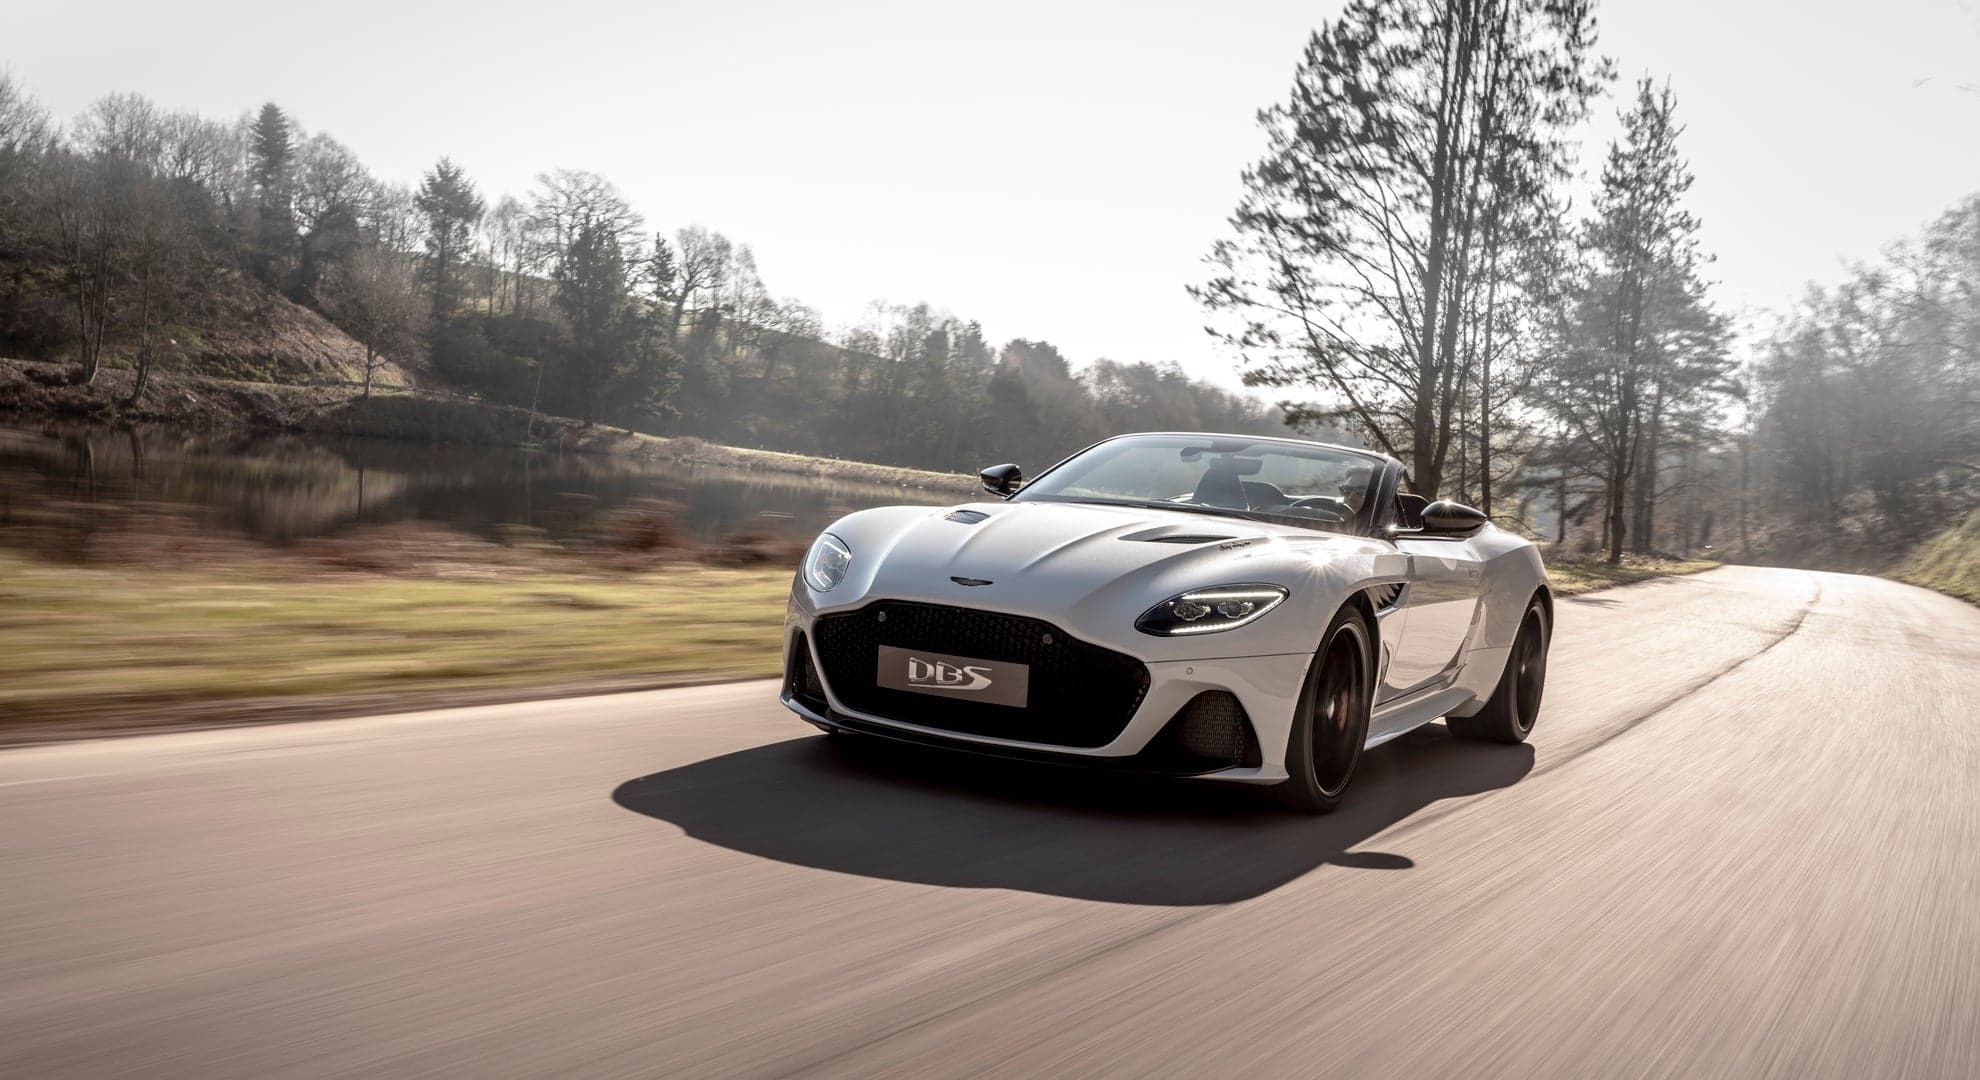 2019 Aston Martin DBS Superleggera Volante: All About That Drop-Top Sexiness